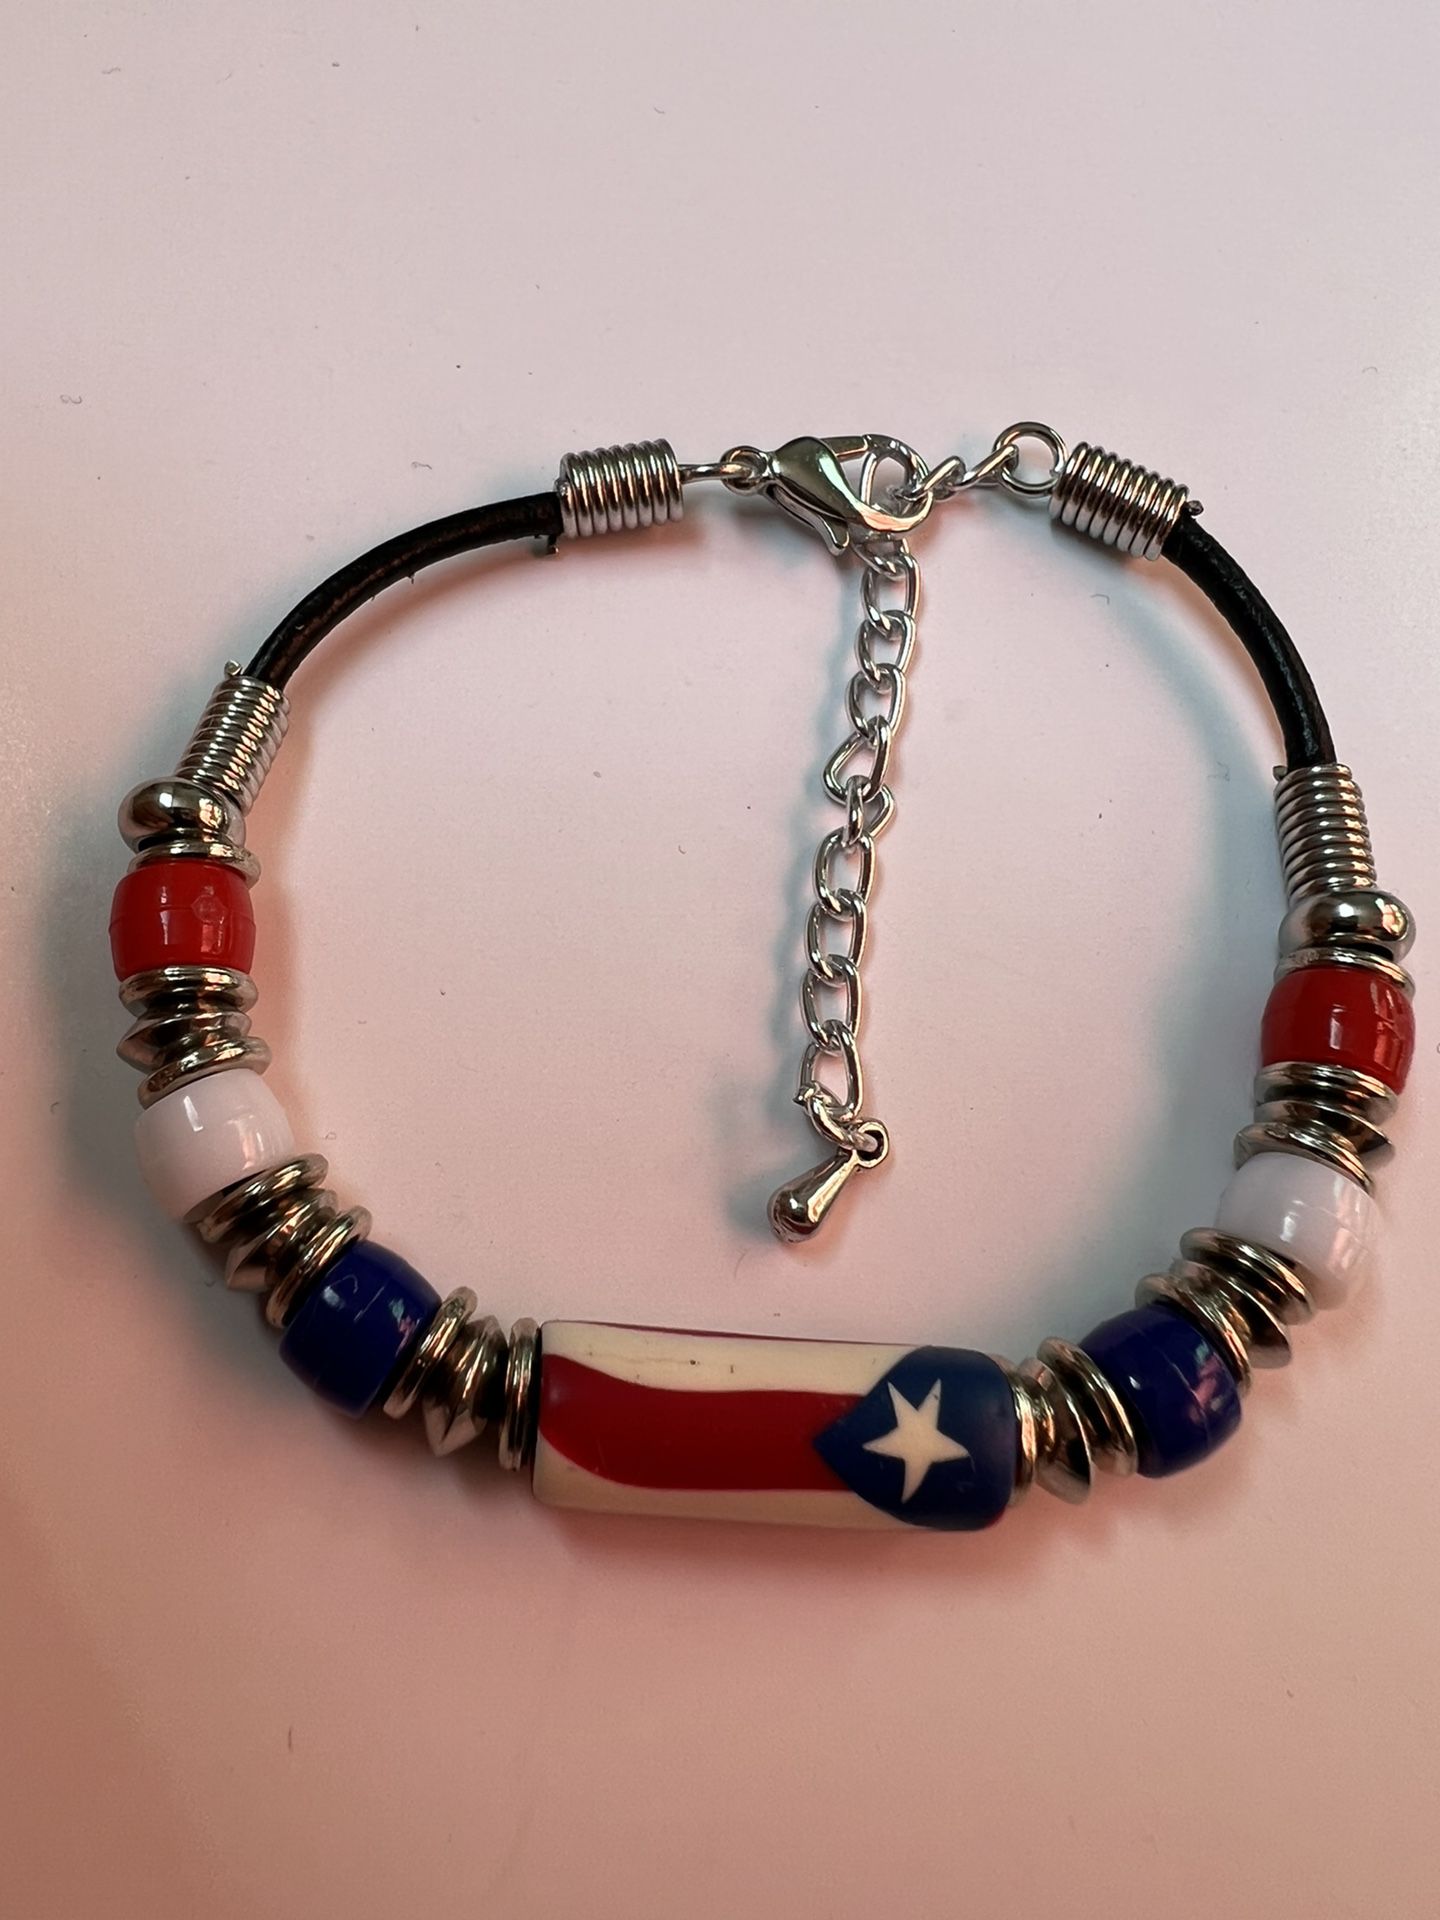 Puerto Rico/Boricua Flag Bracelet 